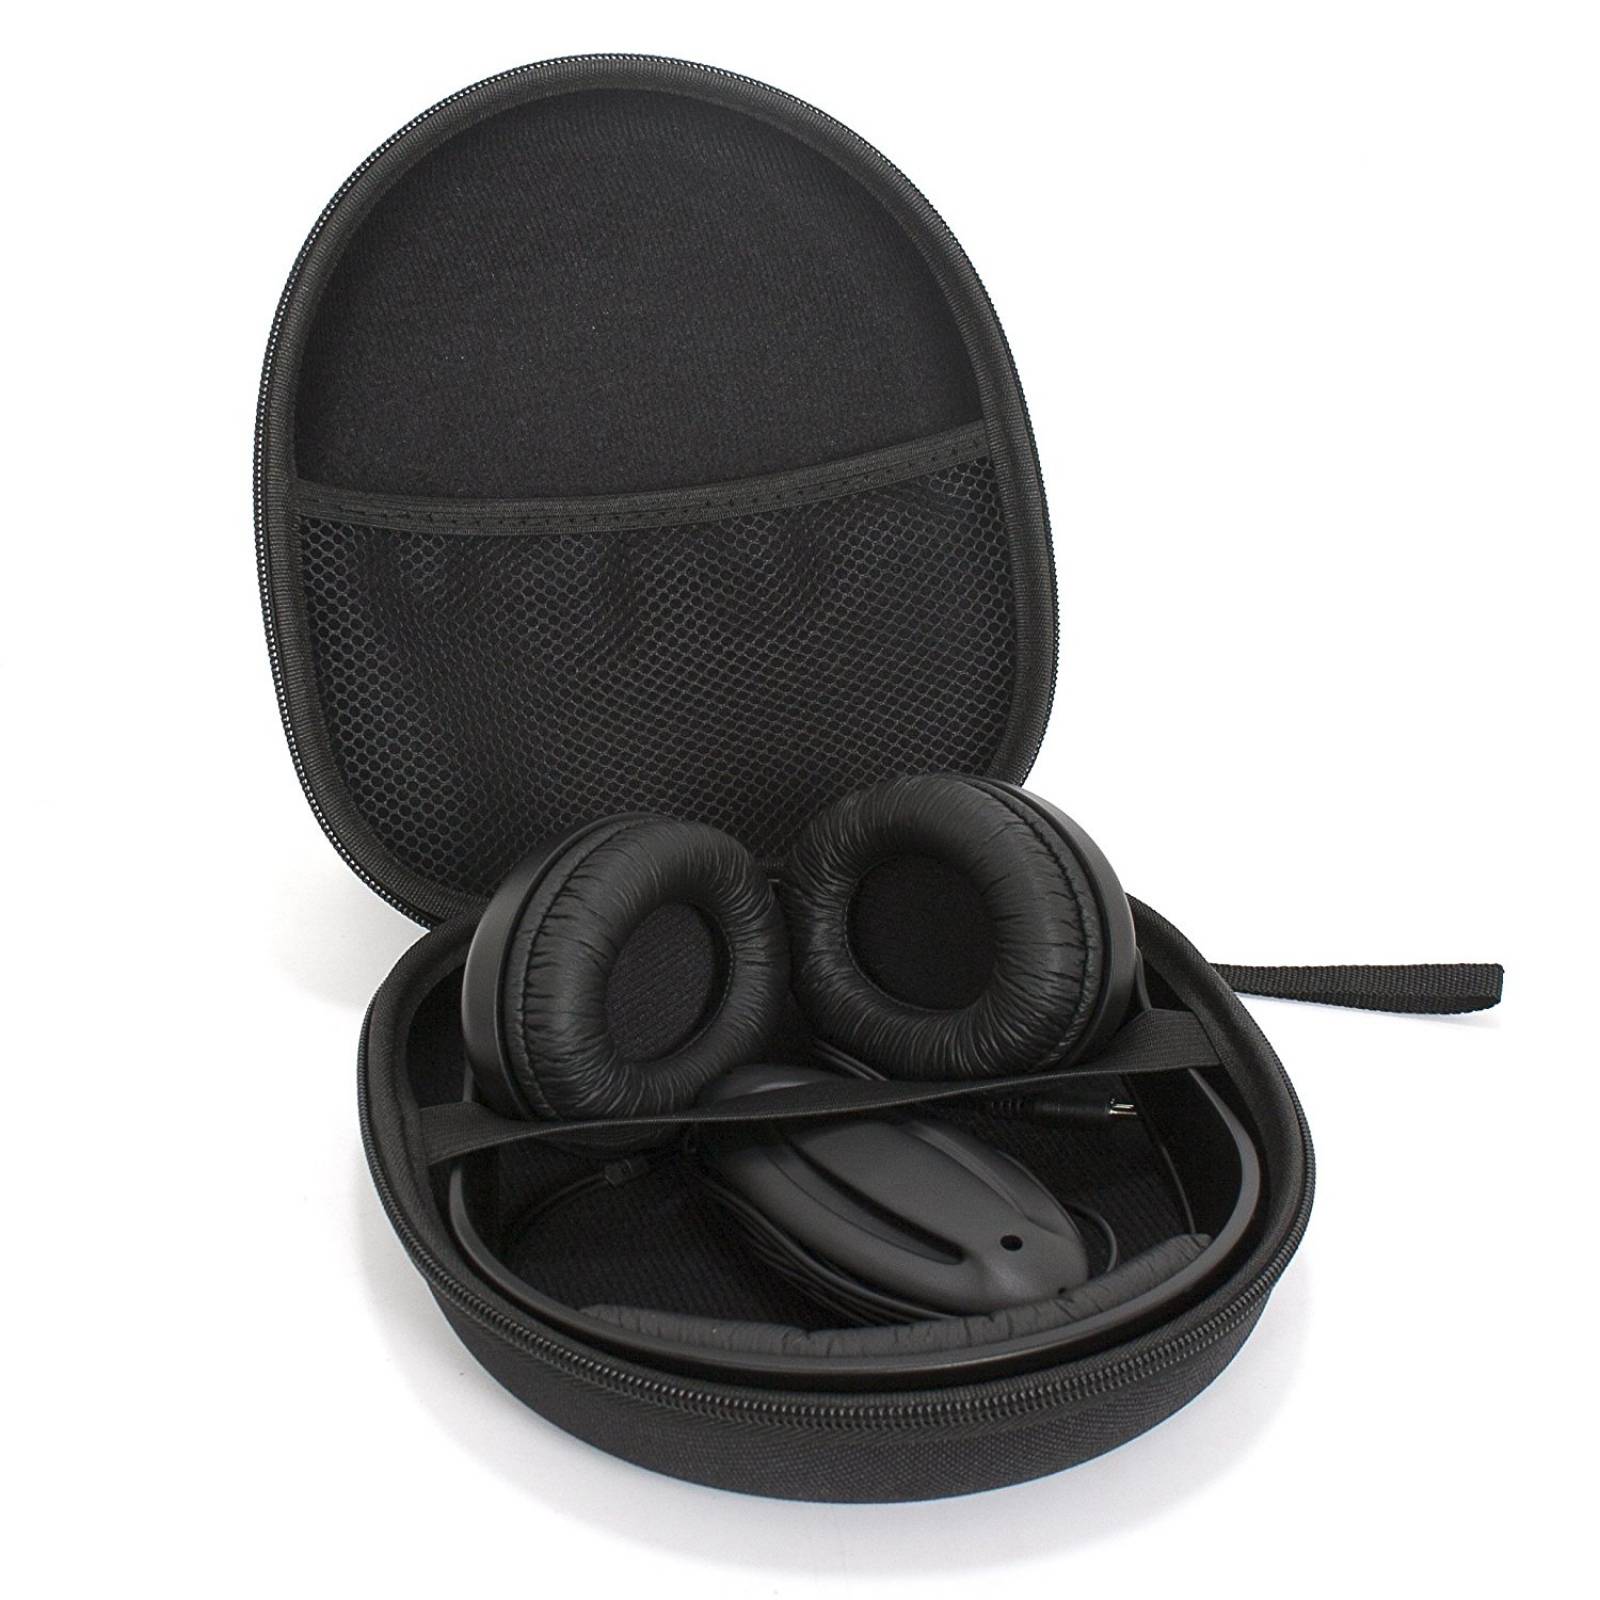 Ginsco auriculares almacenamiento funda bolsa bolsa transpor